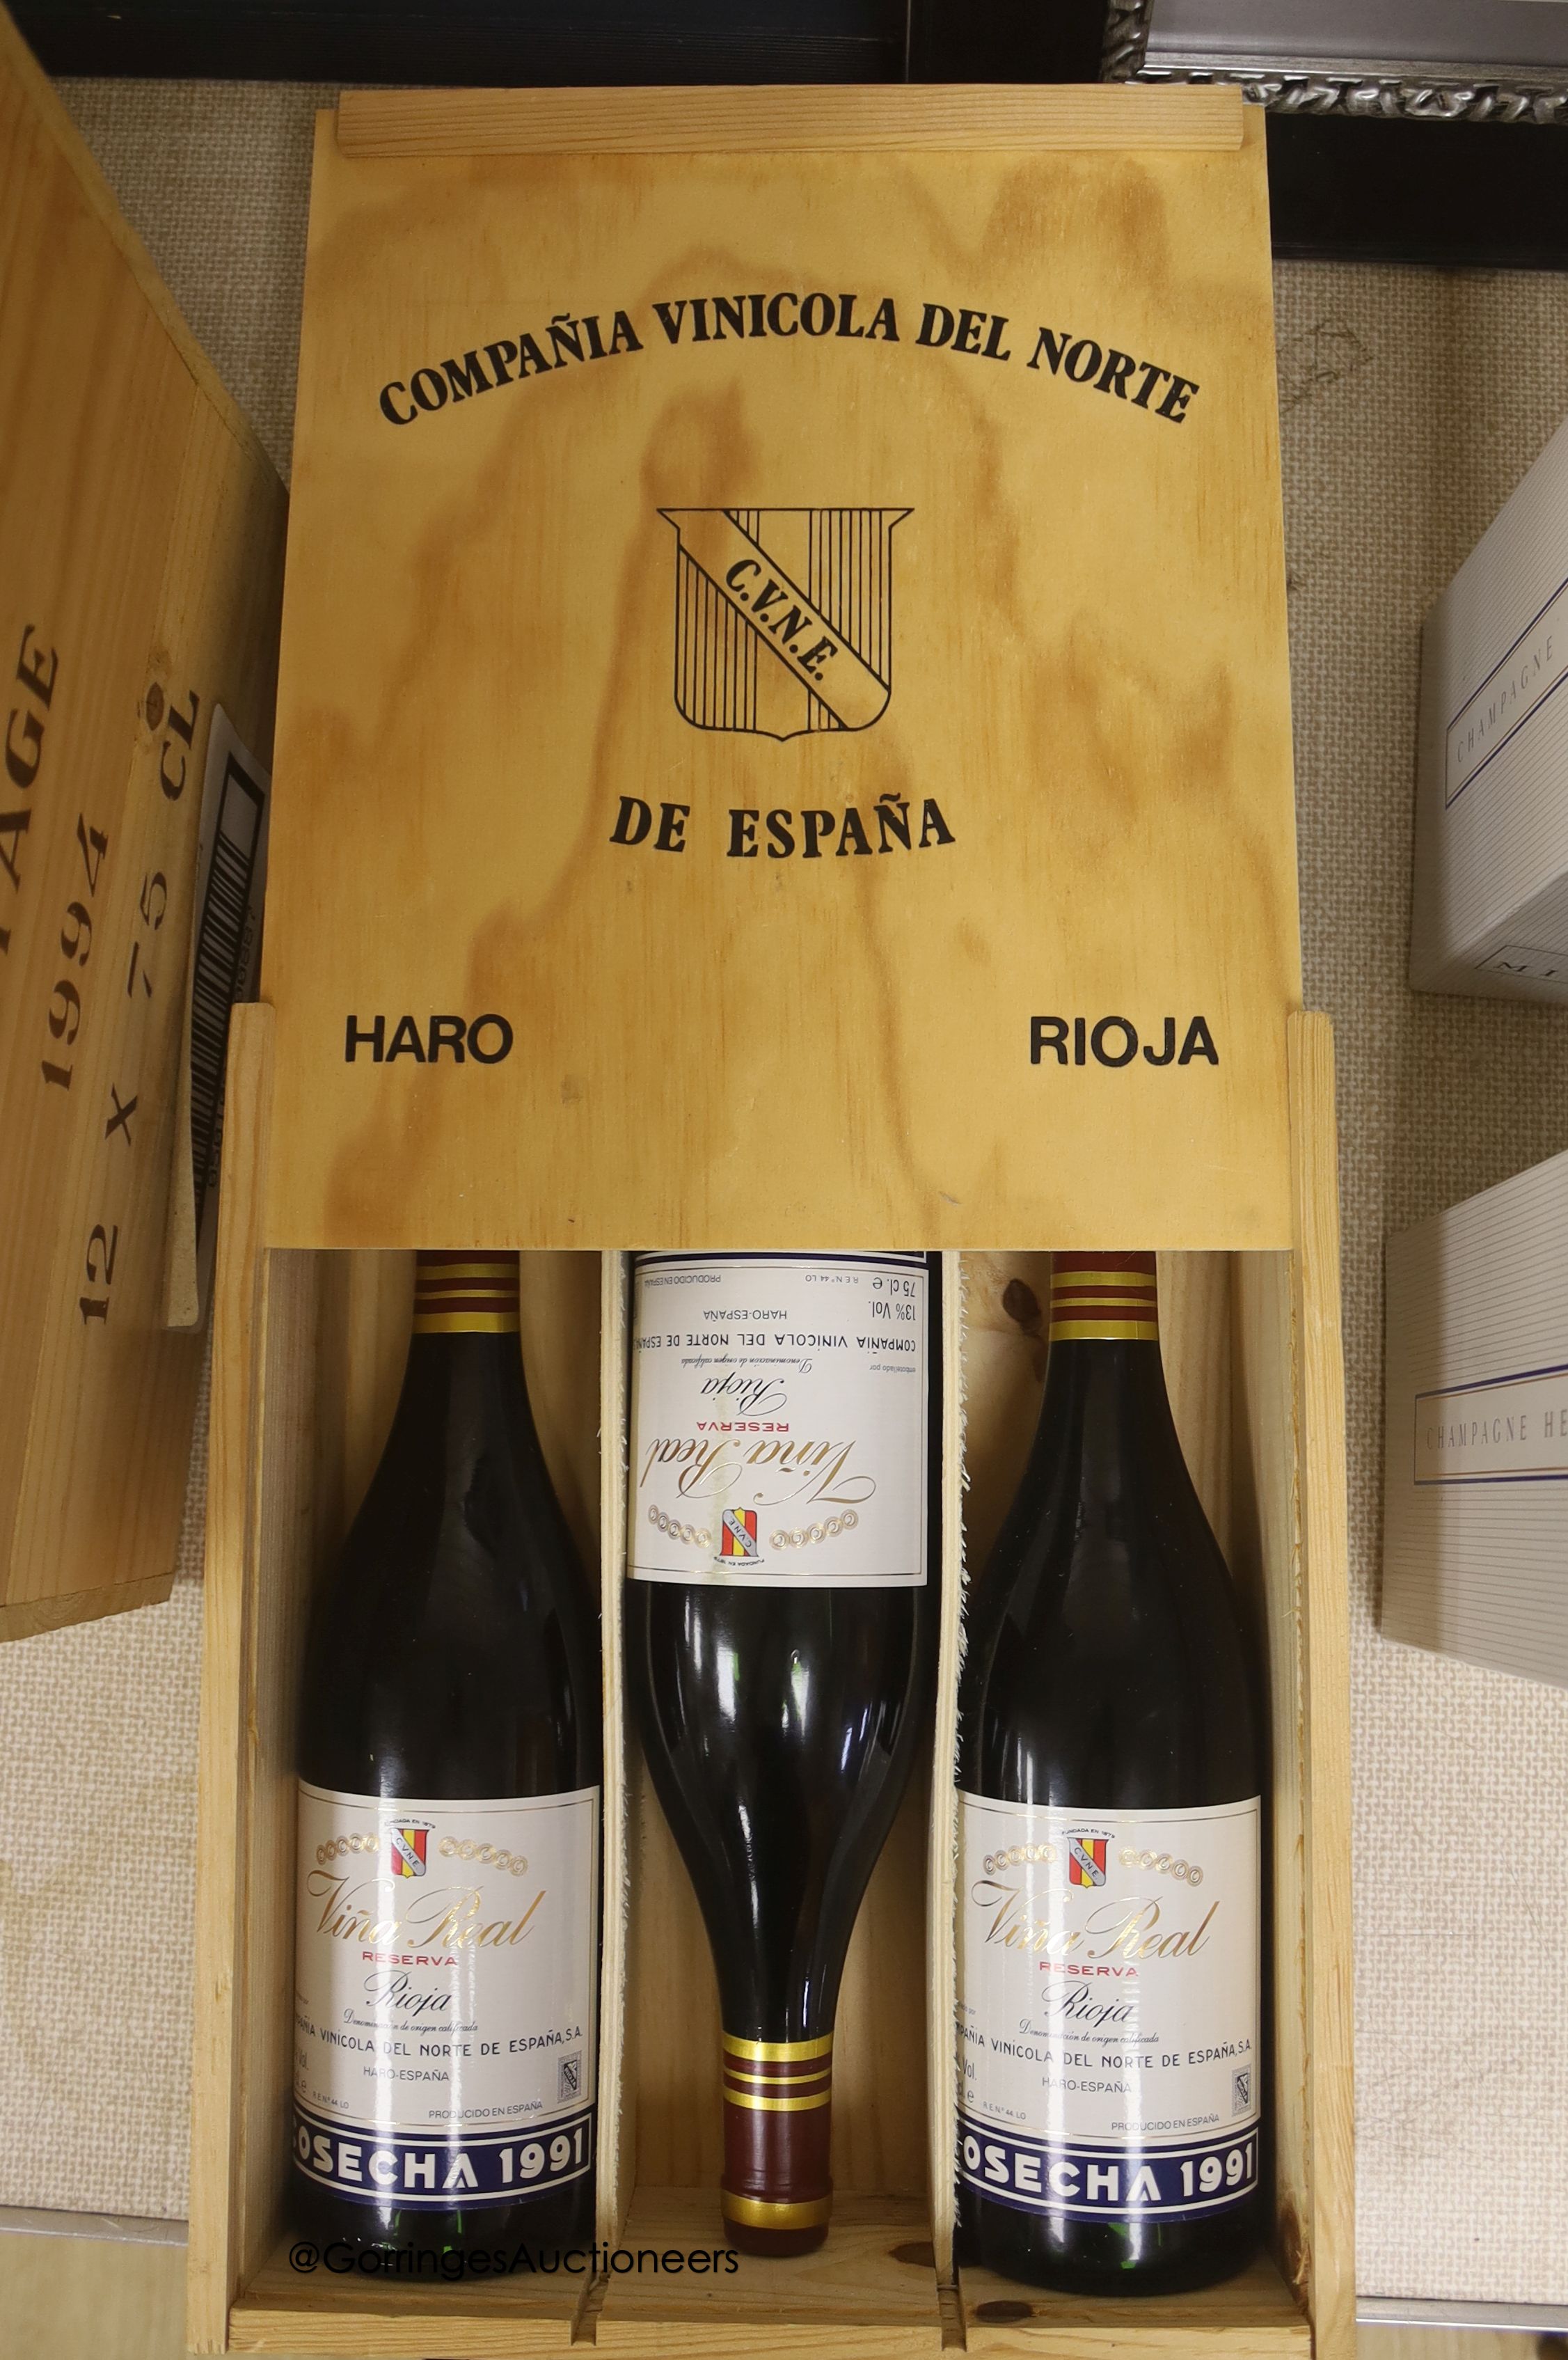 Three bottles of Vina Rela Rioja, 1991, in wood case